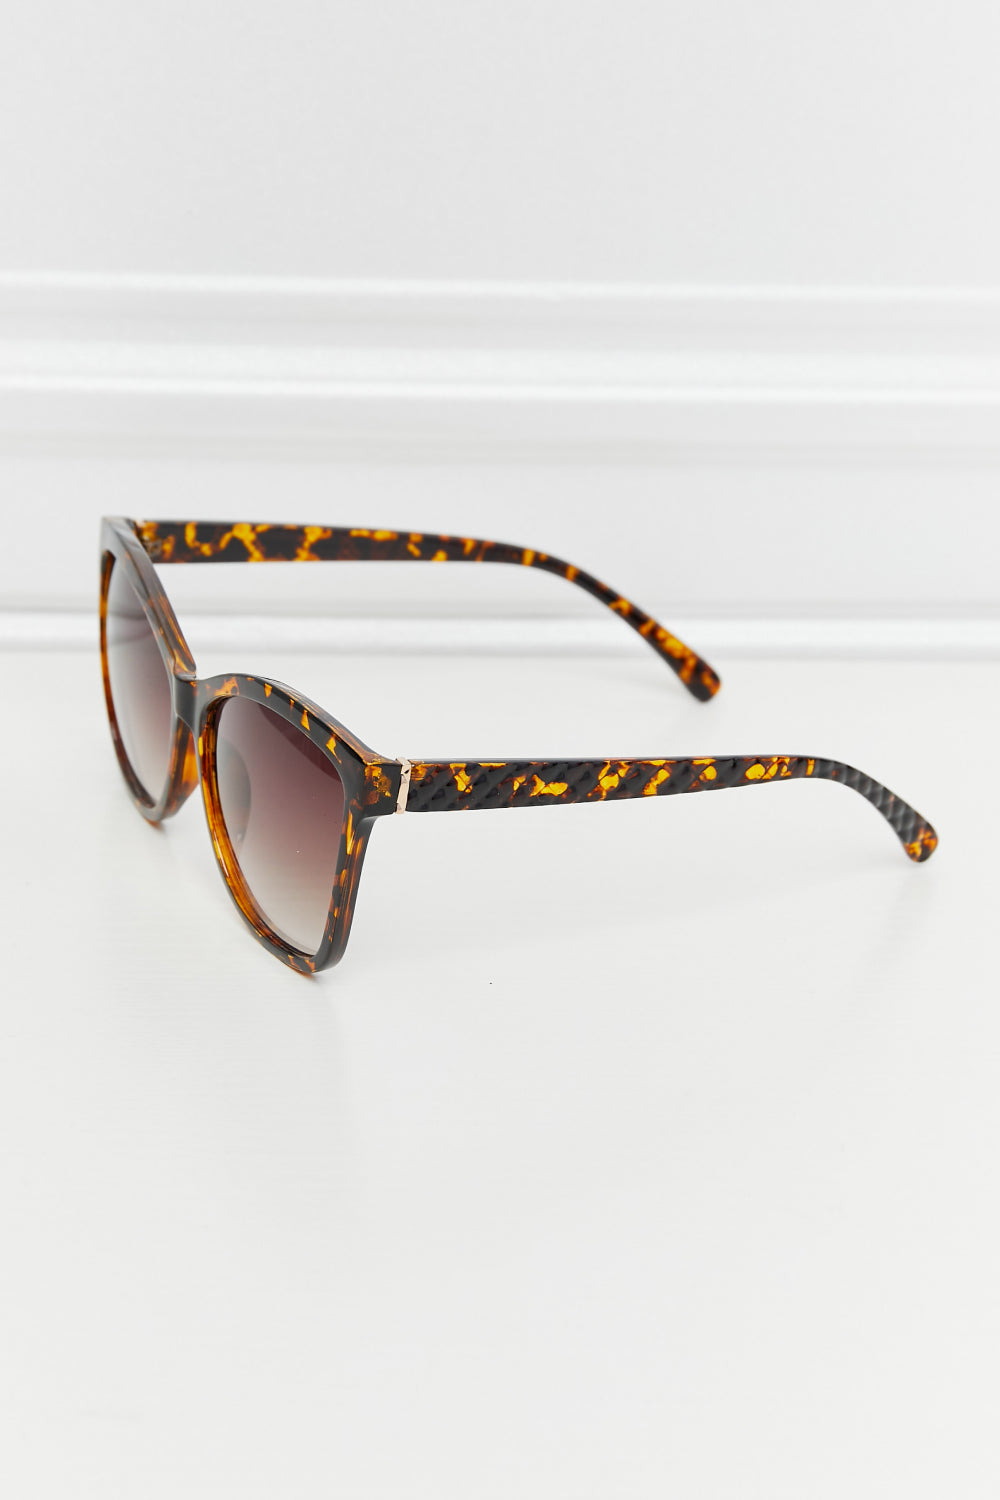 Full Rim Polycarbonate Sunglasses One Size Sunglasses by Vim&Vigor | Vim&Vigor Boutique